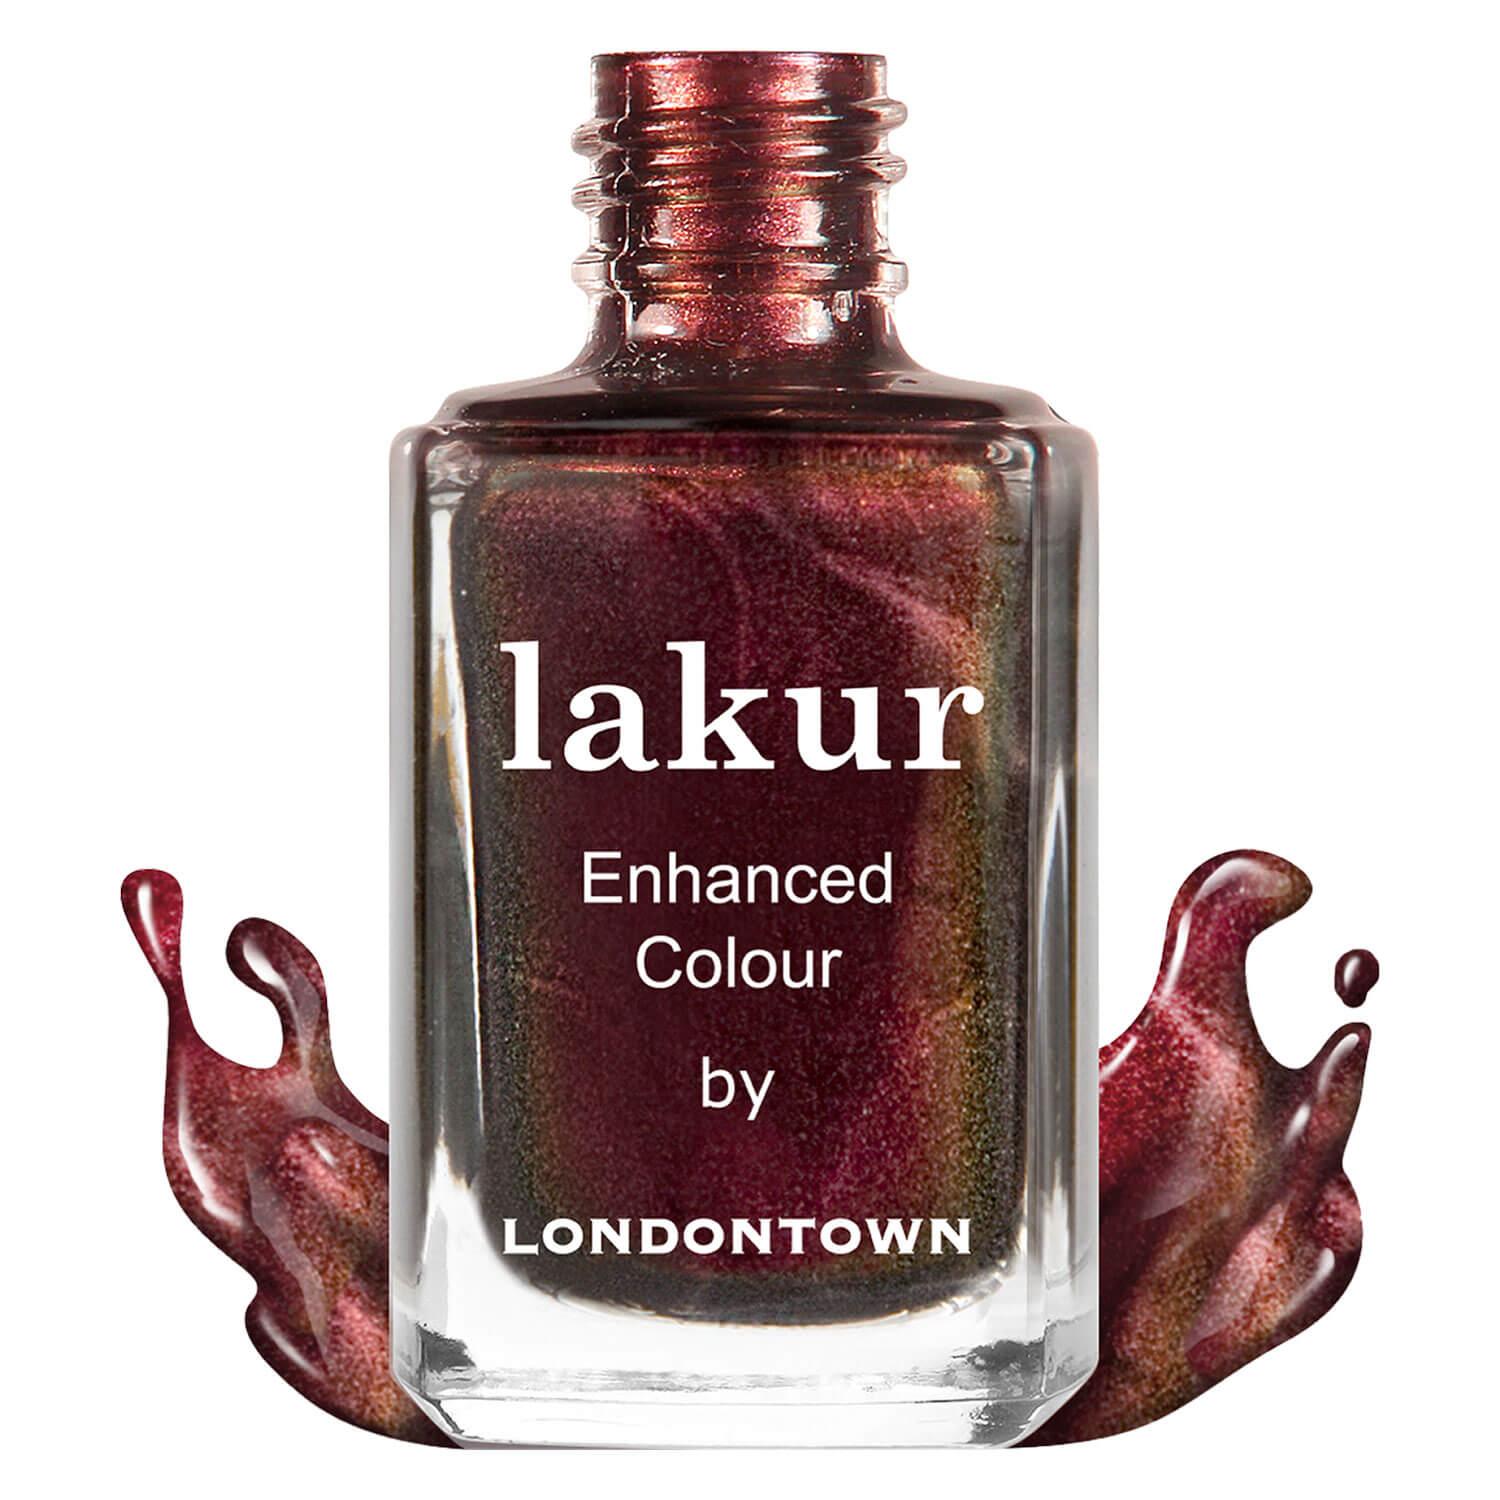 lakur - Cockney Glam